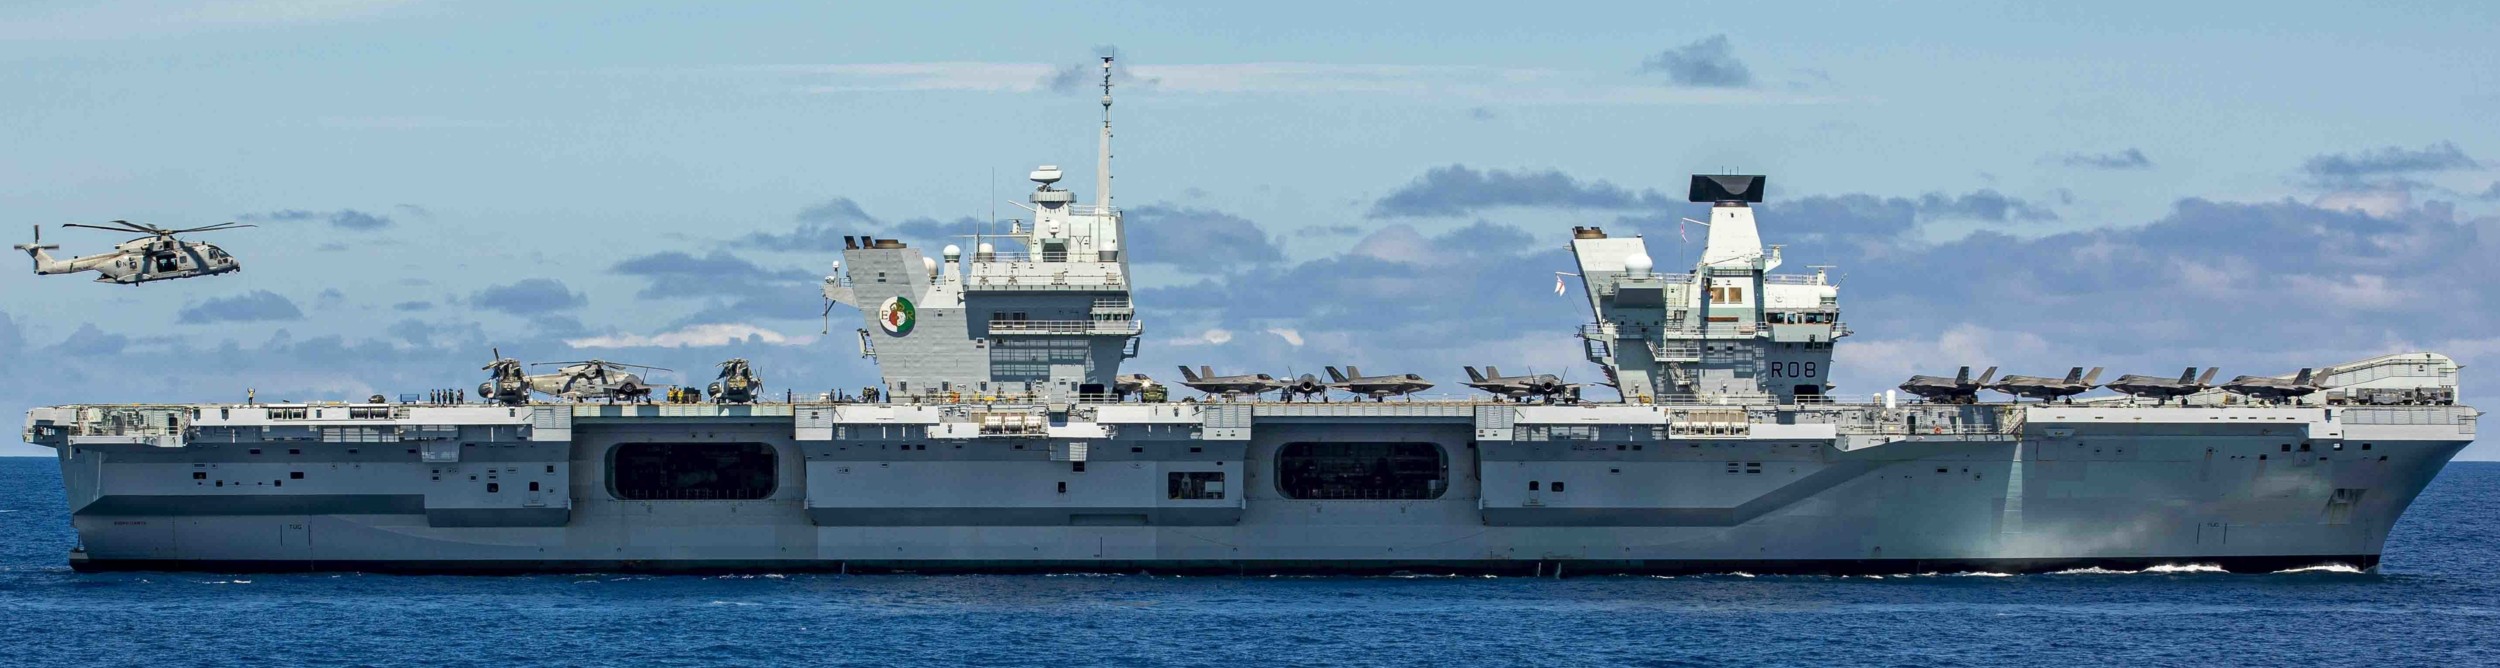 hms queen elizabeth r-08 qnlz aircraft carrier royal navy 129 csg21